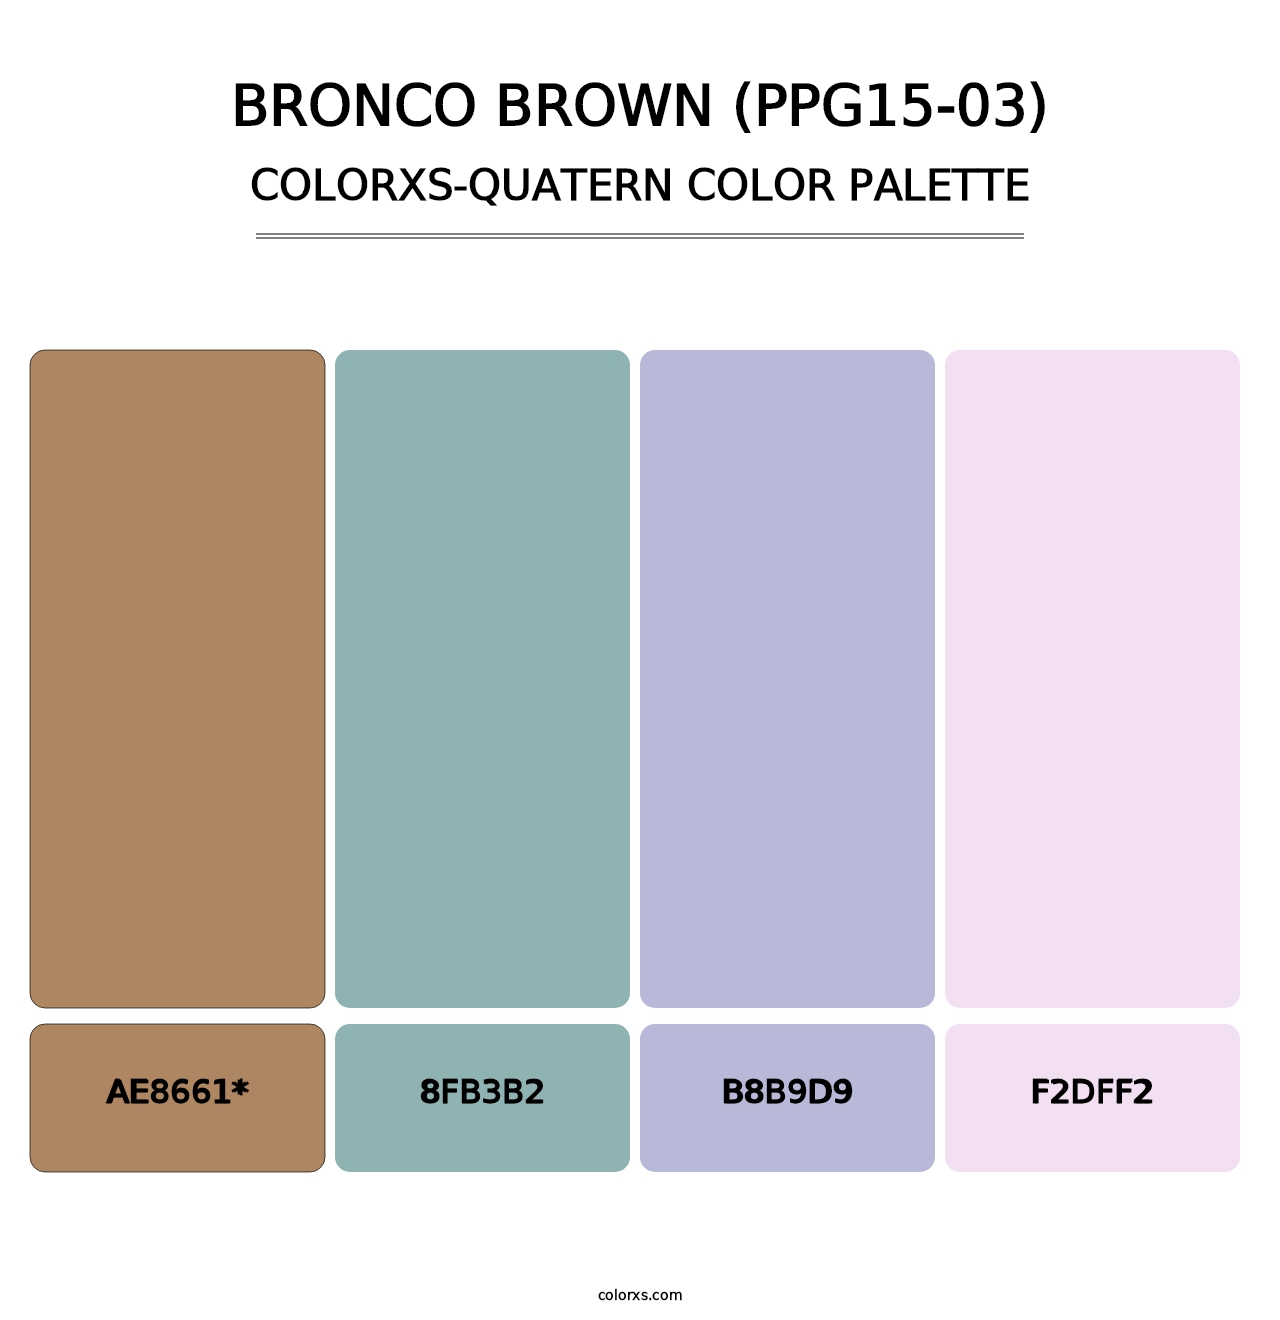 Bronco Brown (PPG15-03) - Colorxs Quatern Palette